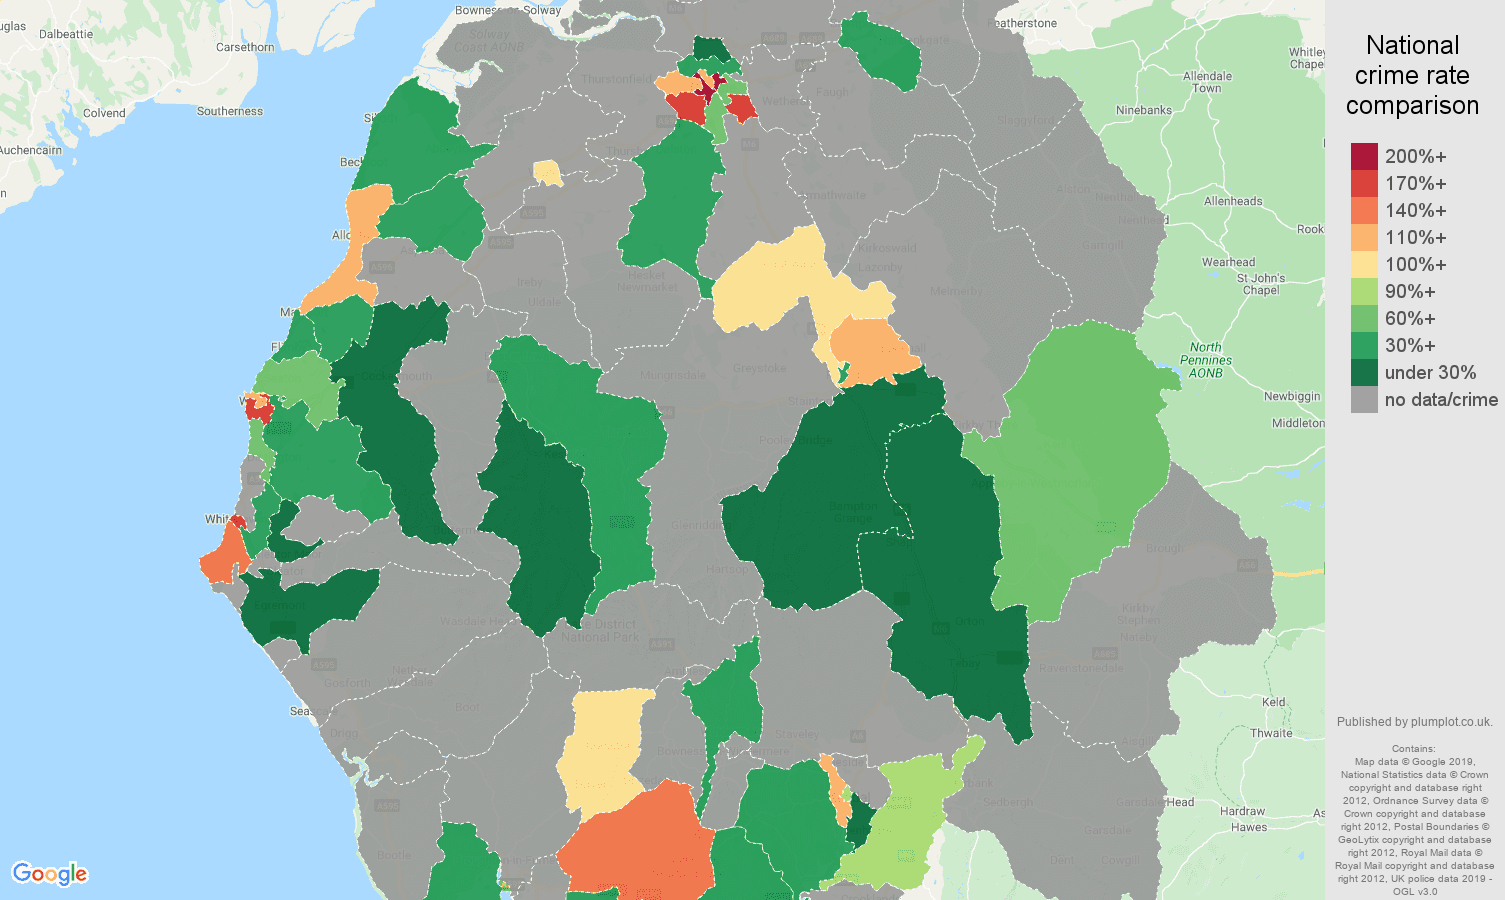 Cumbria possession of weapons crime rate comparison map